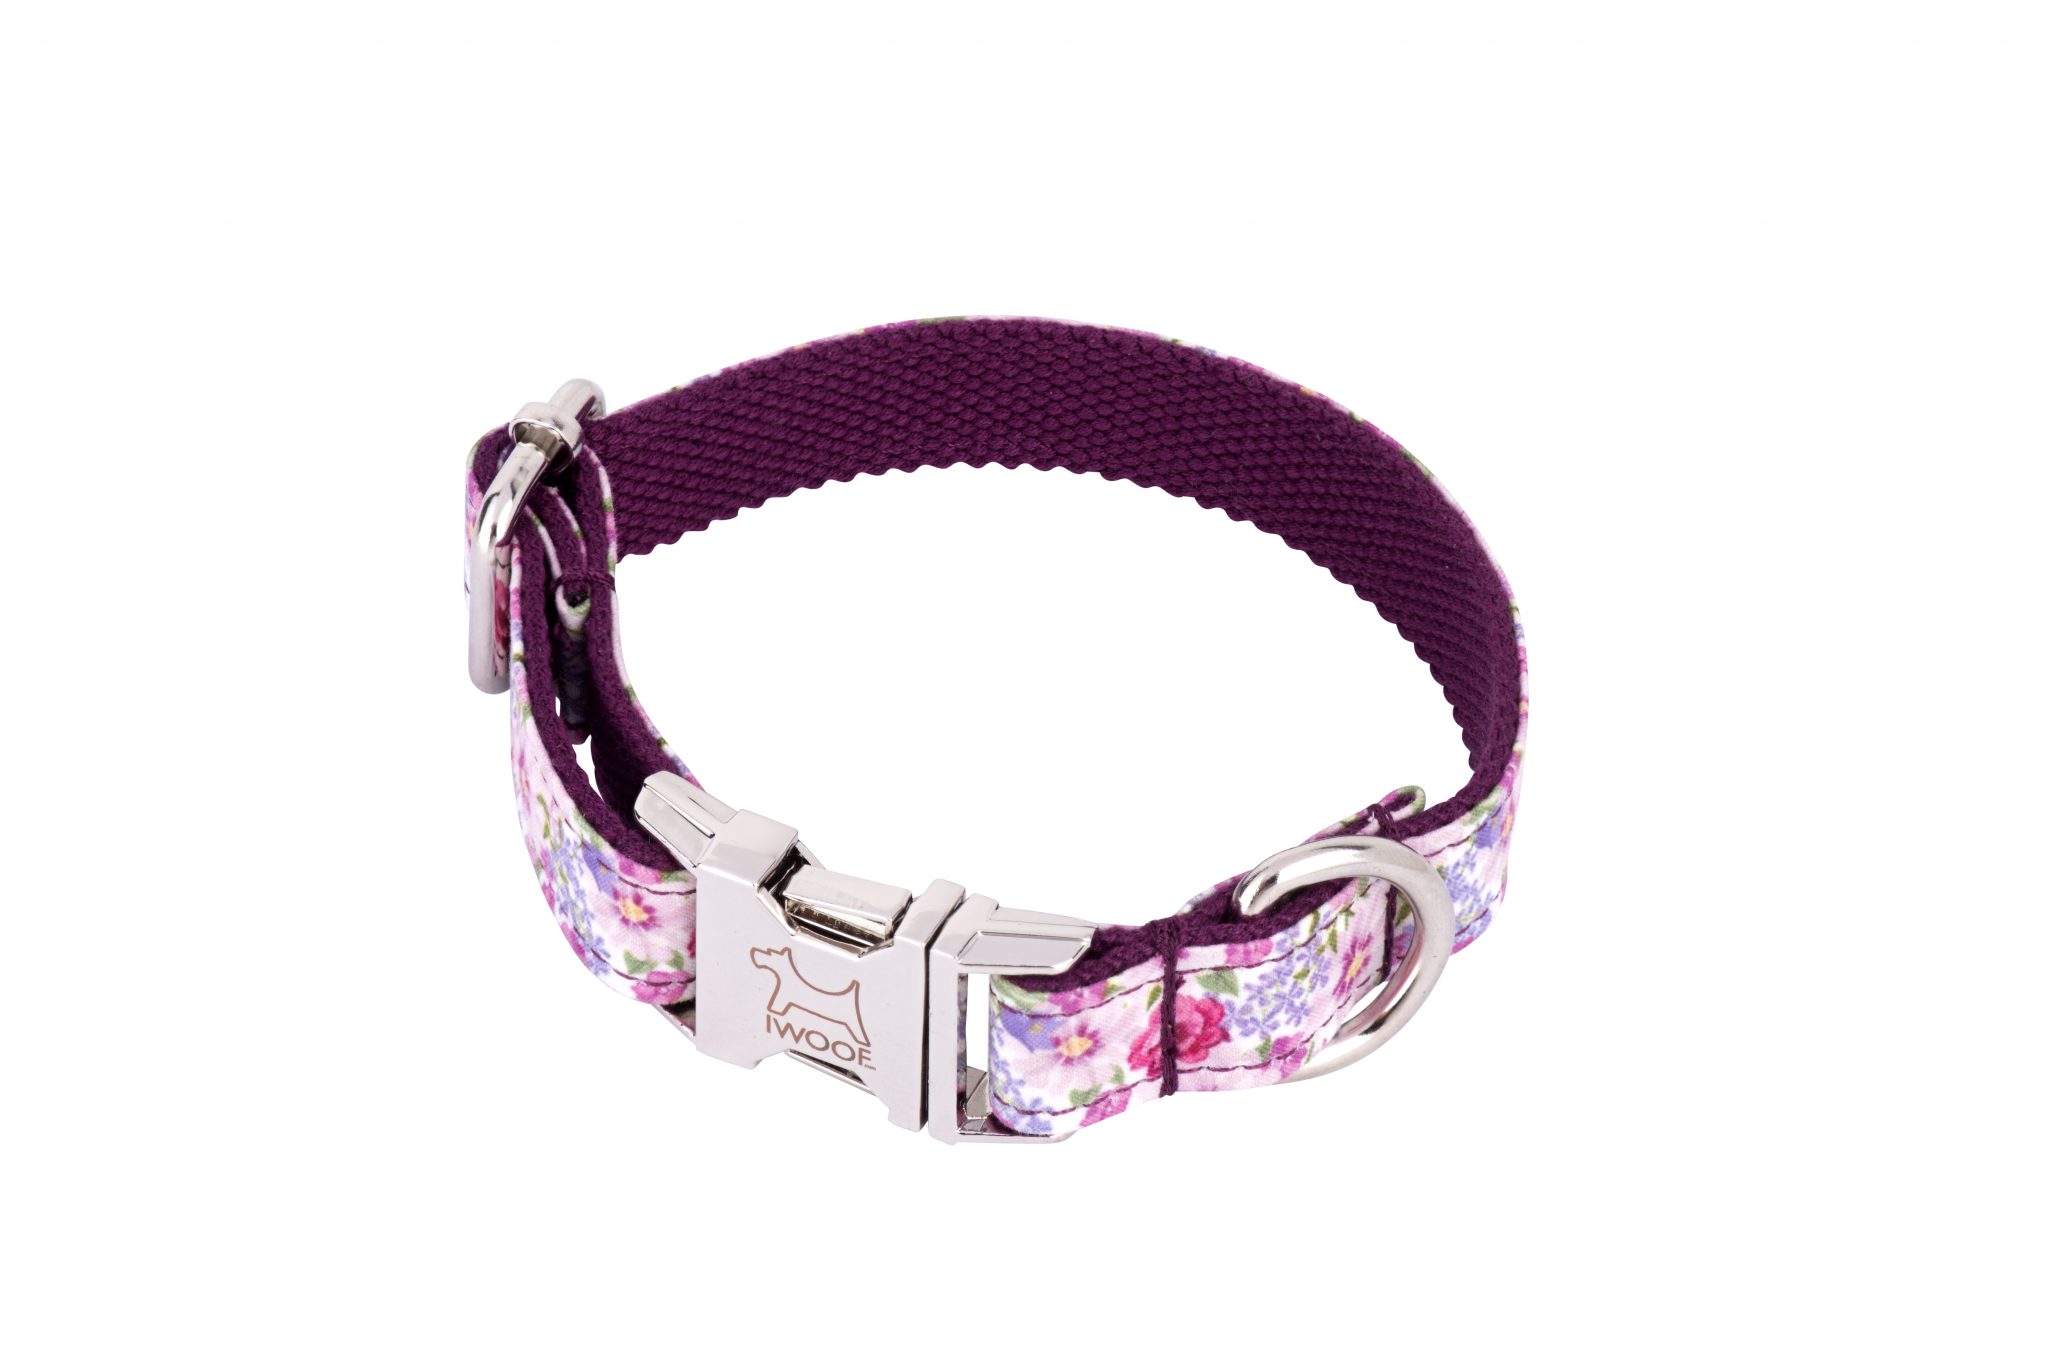 Pink Blossom designer dog collar and matching designer dog lead by IWOOF